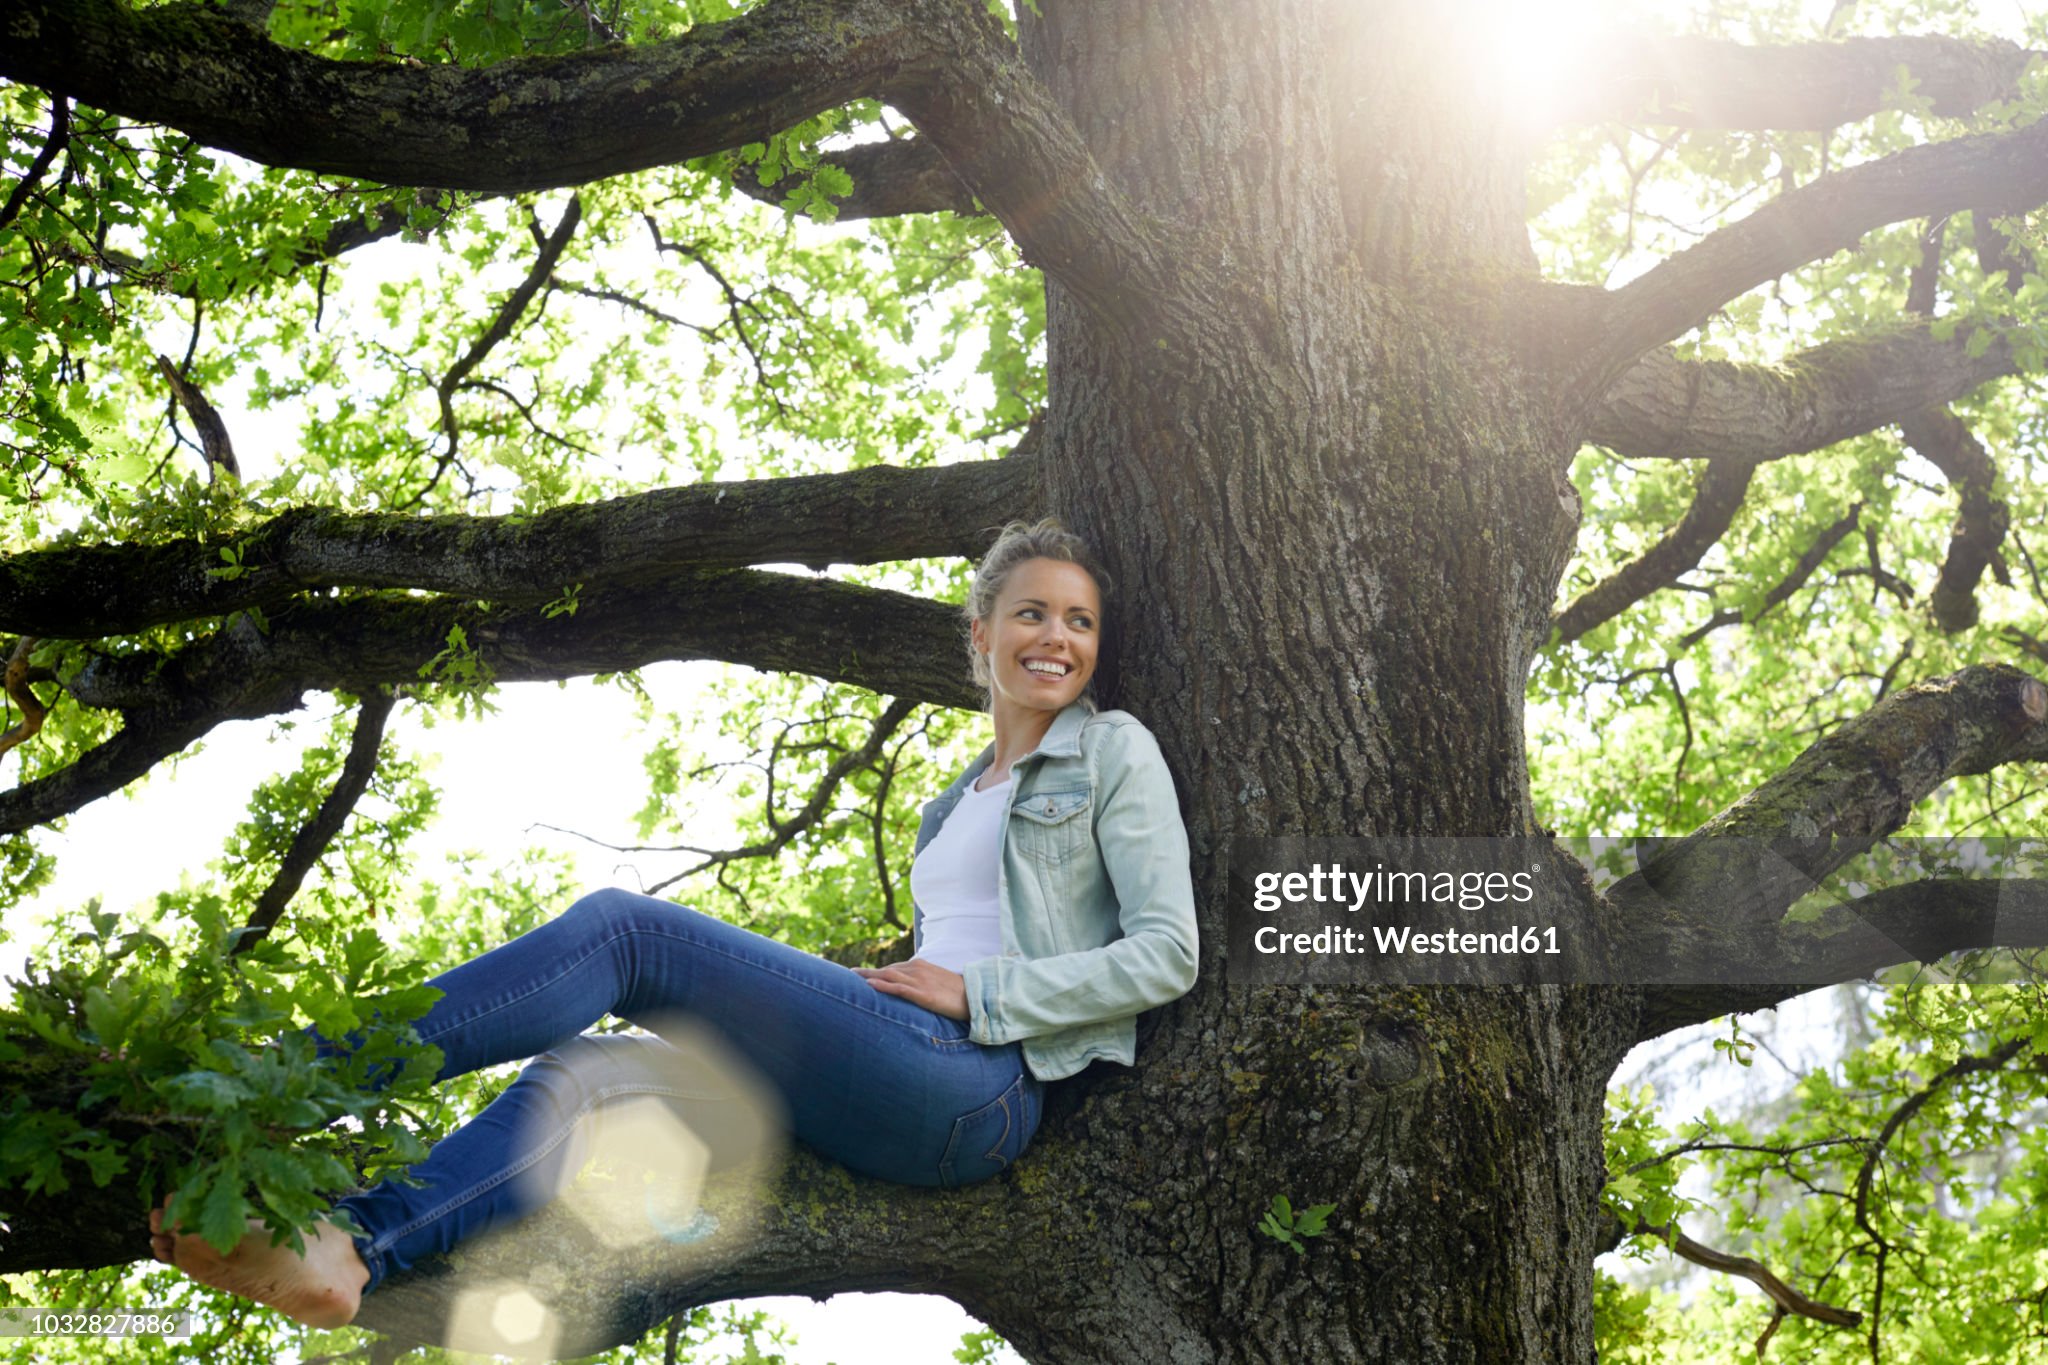 https://media.gettyimages.com/id/1032827886/photo/smiling-woman-sitting-on-branch-relaxing.jpg?s=2048x2048&amp;w=gi&amp;k=20&amp;c=yHIADU1gOEvFcj41L4uqmBPeSaN-V4qL4MwR8EZAM84=